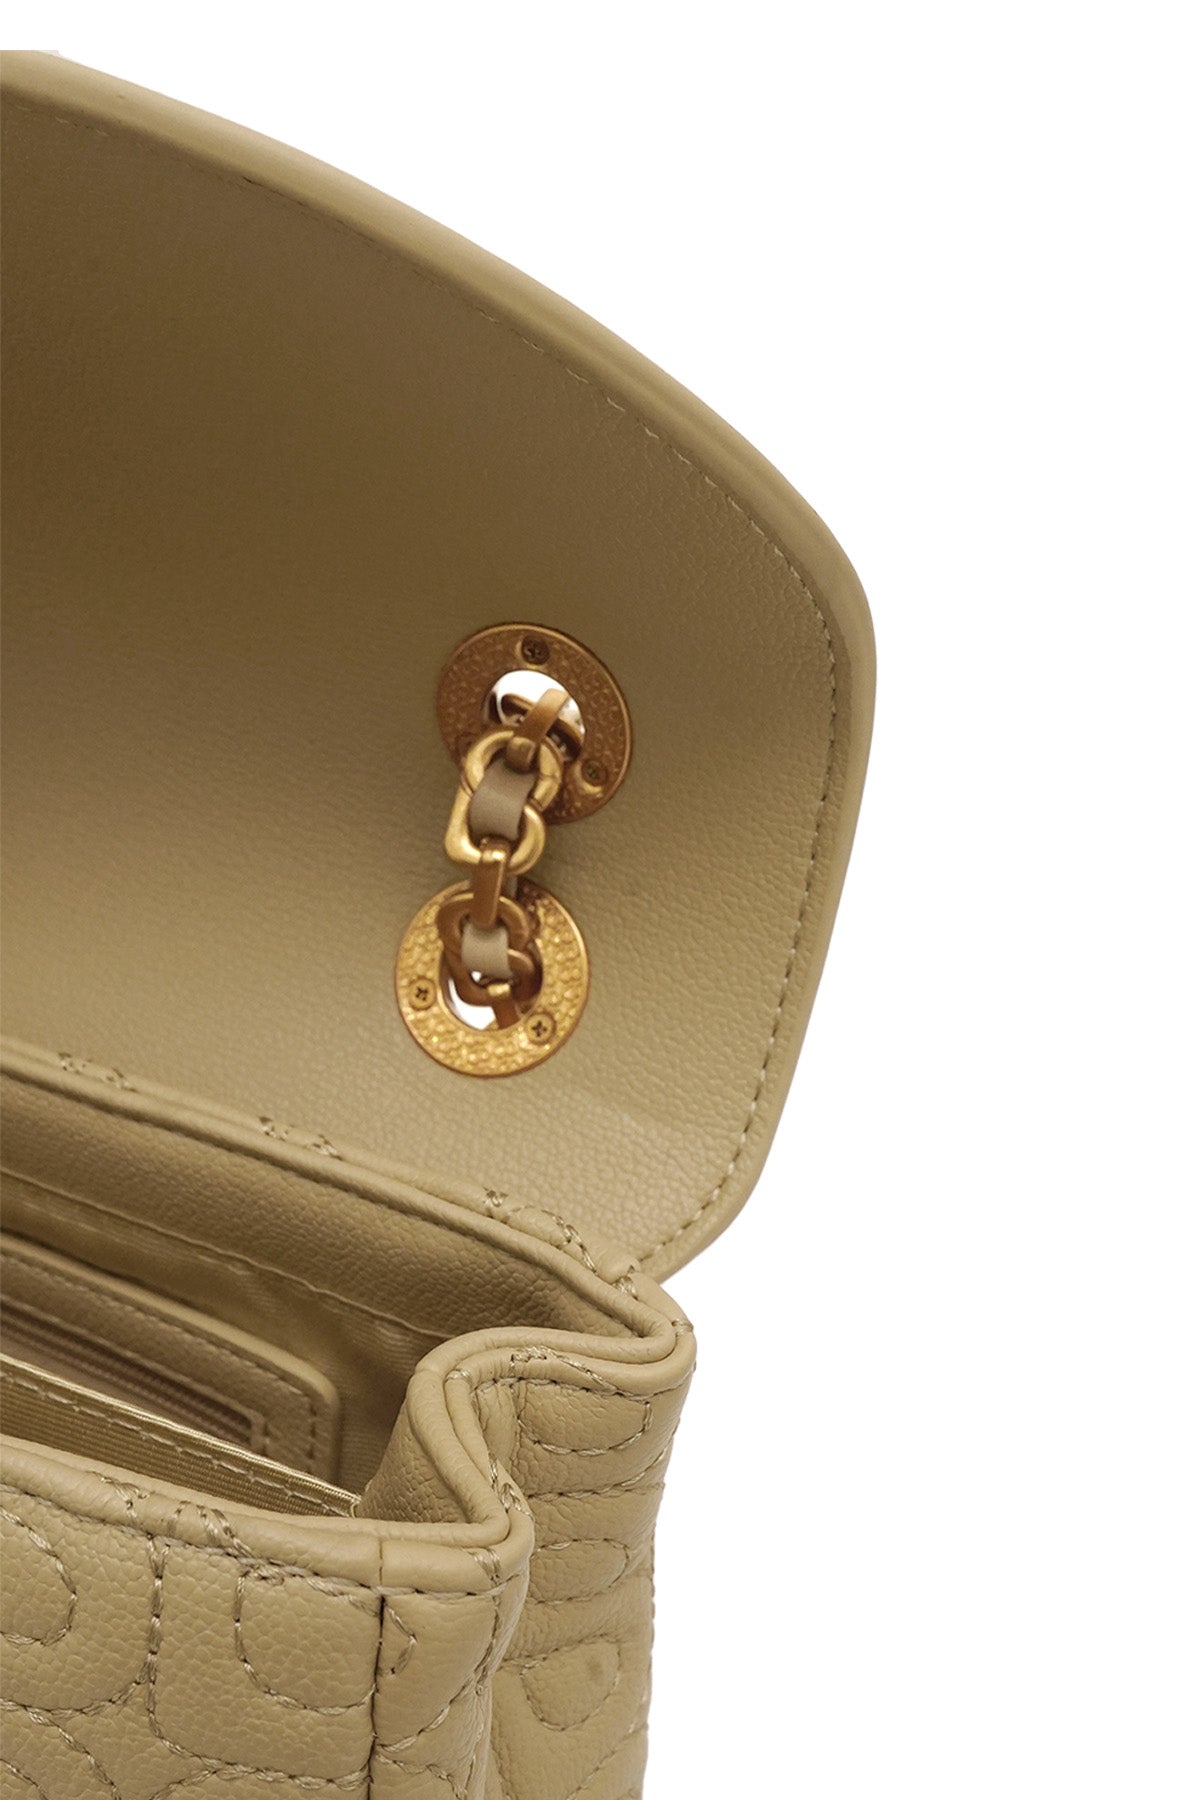 Aluna Flap Bag Buttonscarves #buttonscarves #buttonscarvesreview